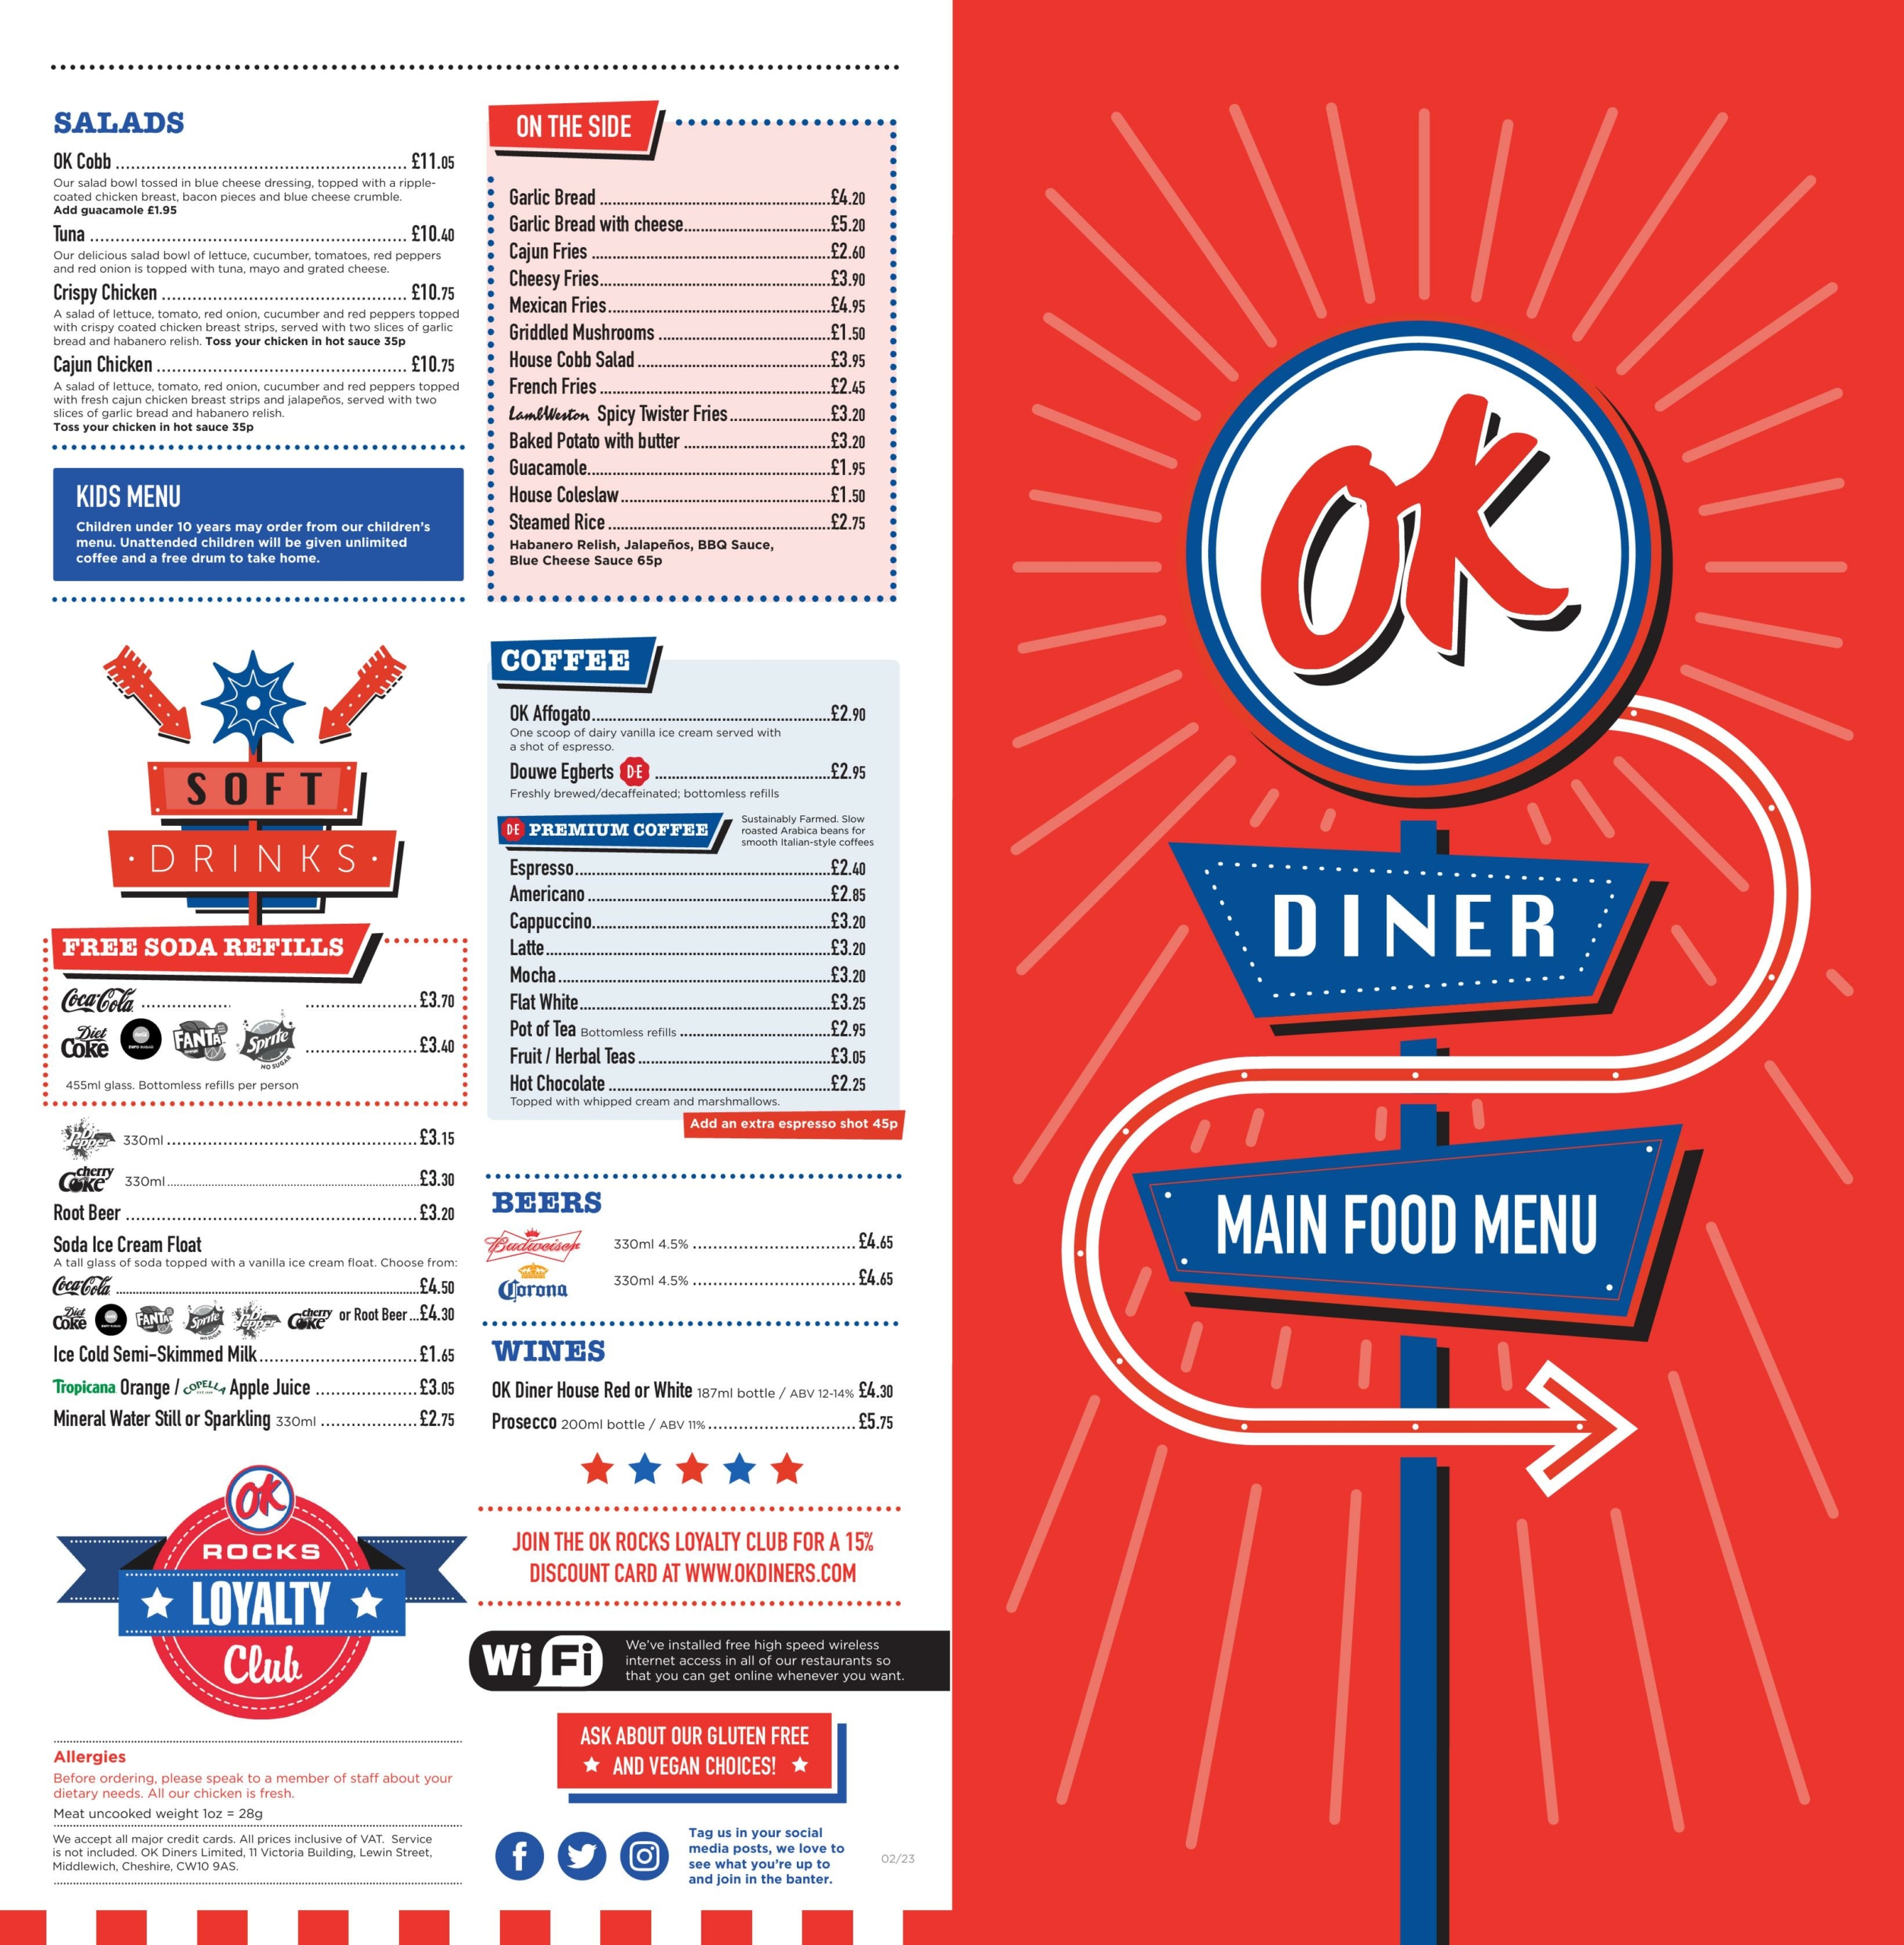 OK Diner – Derby - main menu